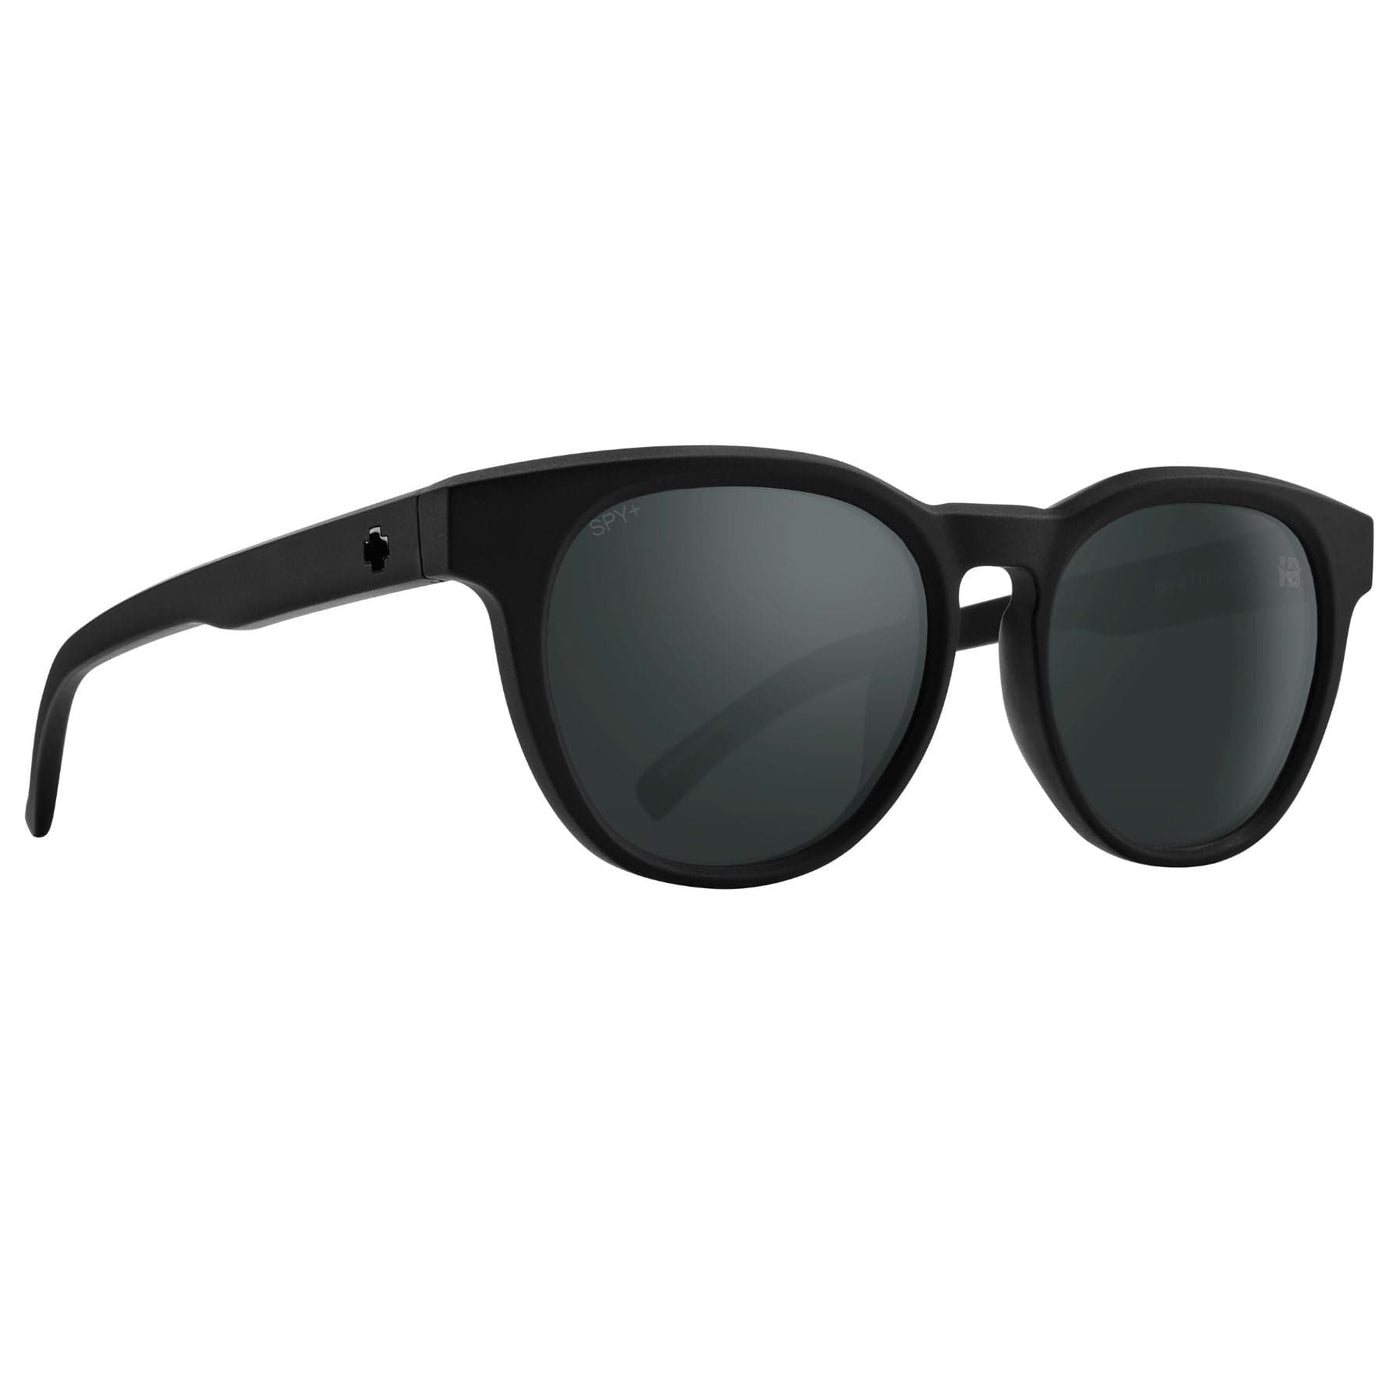 SPY CEDROS Sunglasses Matte Black - Happy Boost Polar Black Mirror